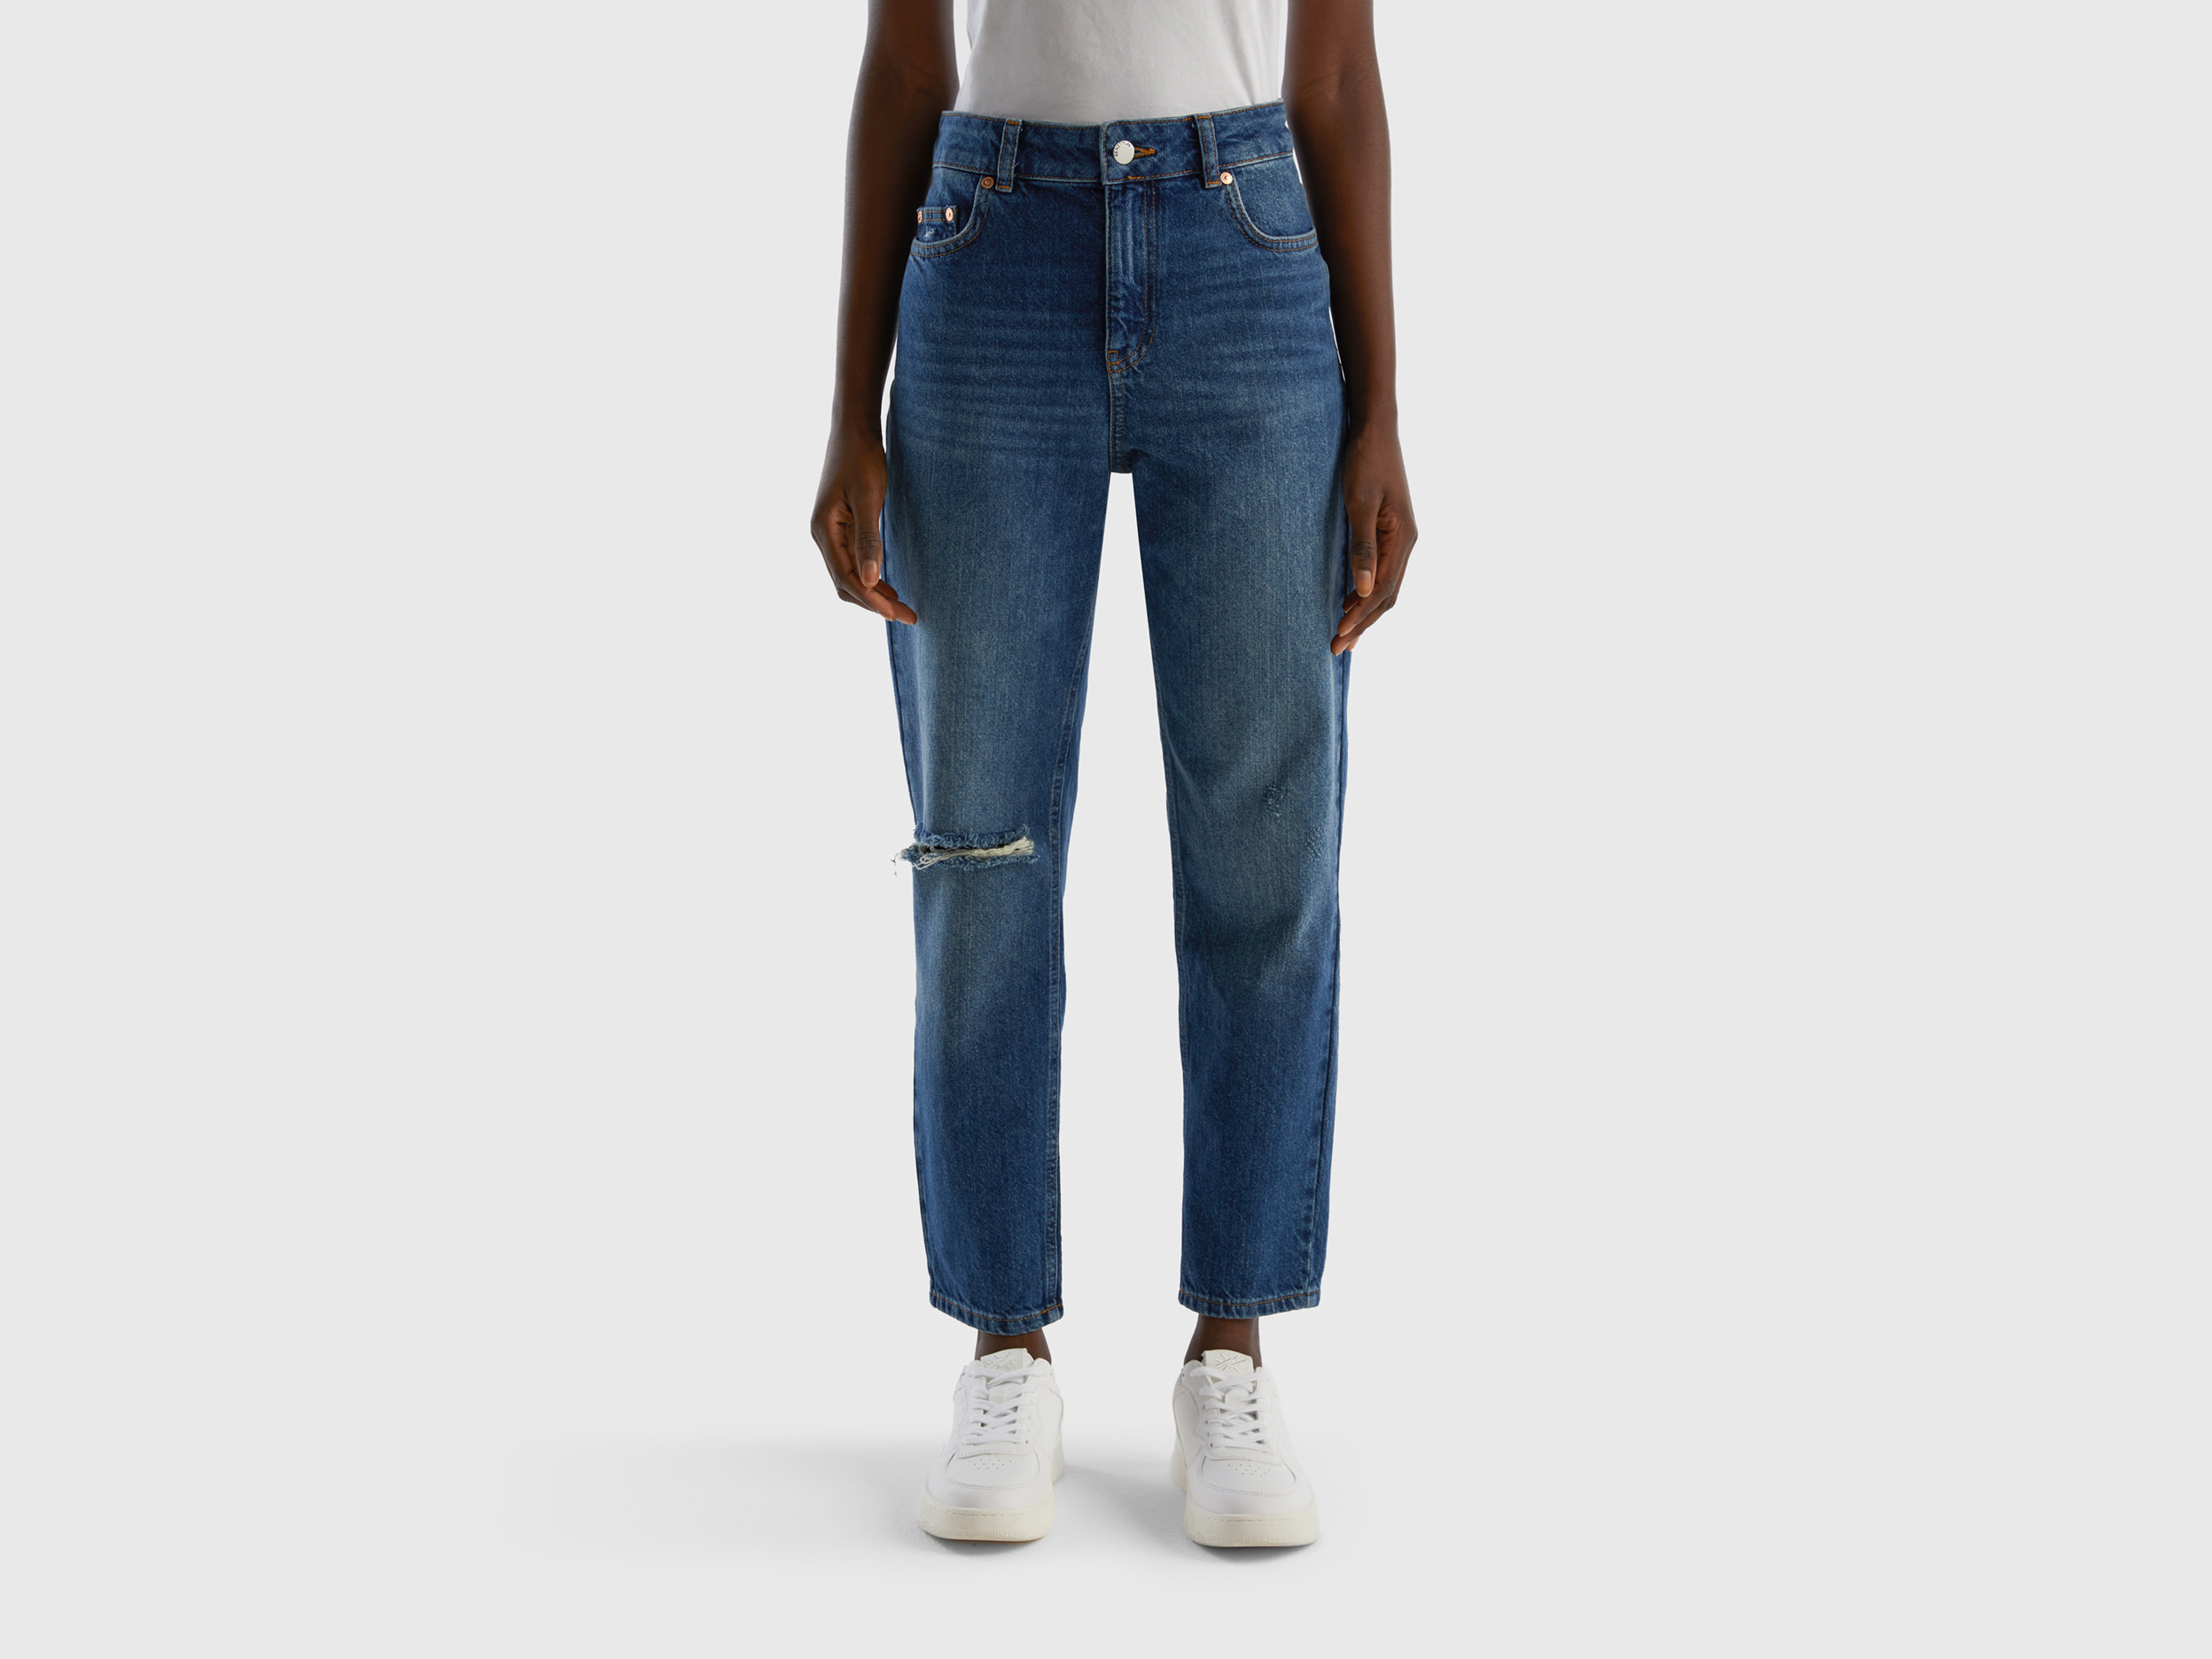 Benetton, Cropped High-waisted Jeans, size 28, Dark Blue, Women